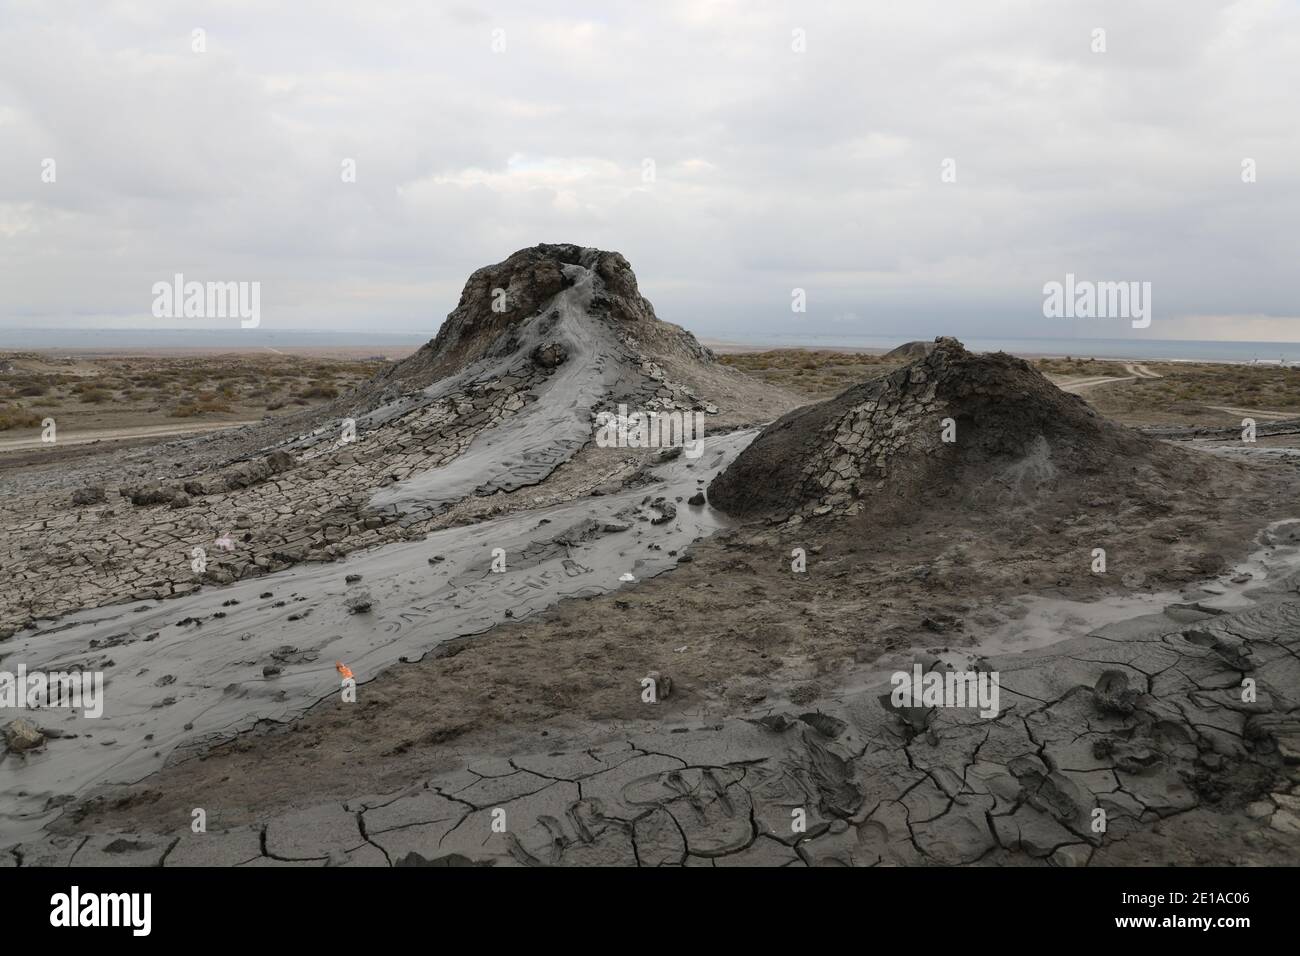 Landscape with mud volcanoes in Azerbaijan Stock Photo